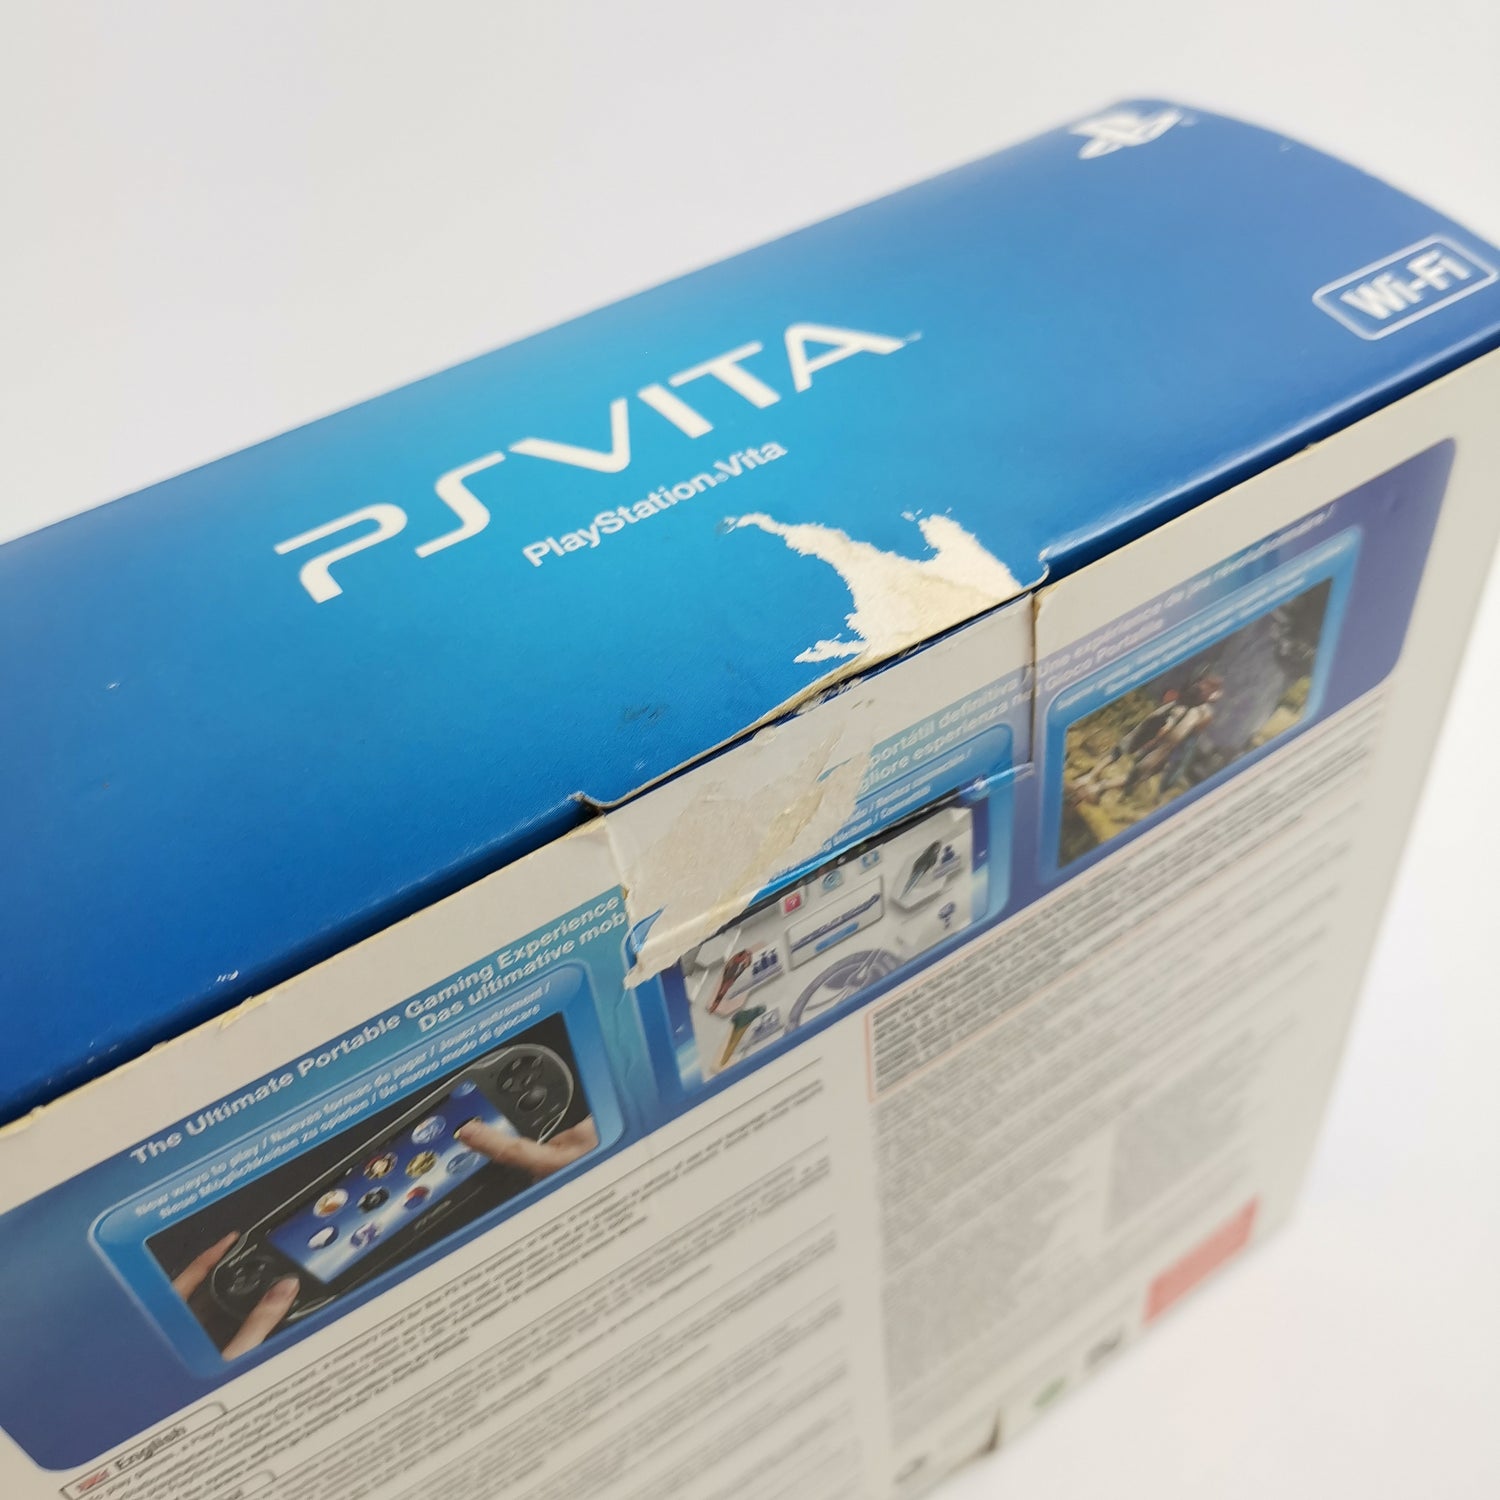 Sony Playstation PSVITA Konsole : Little Big Planet Bundle Console | OVP PS Vita